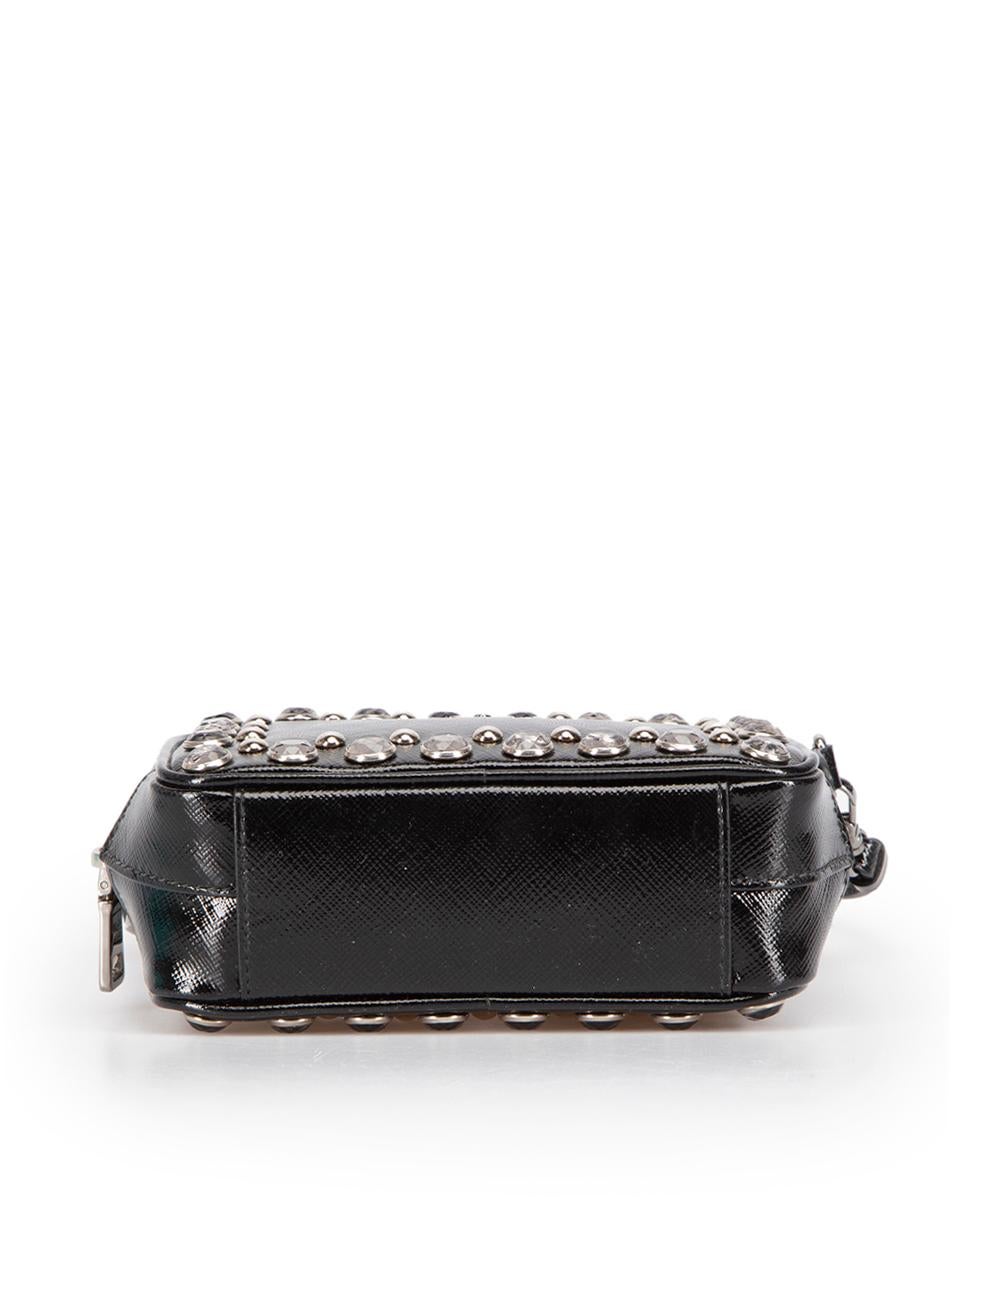 Women's Prada Black Patent Embellished Mini Camera Bag For Sale